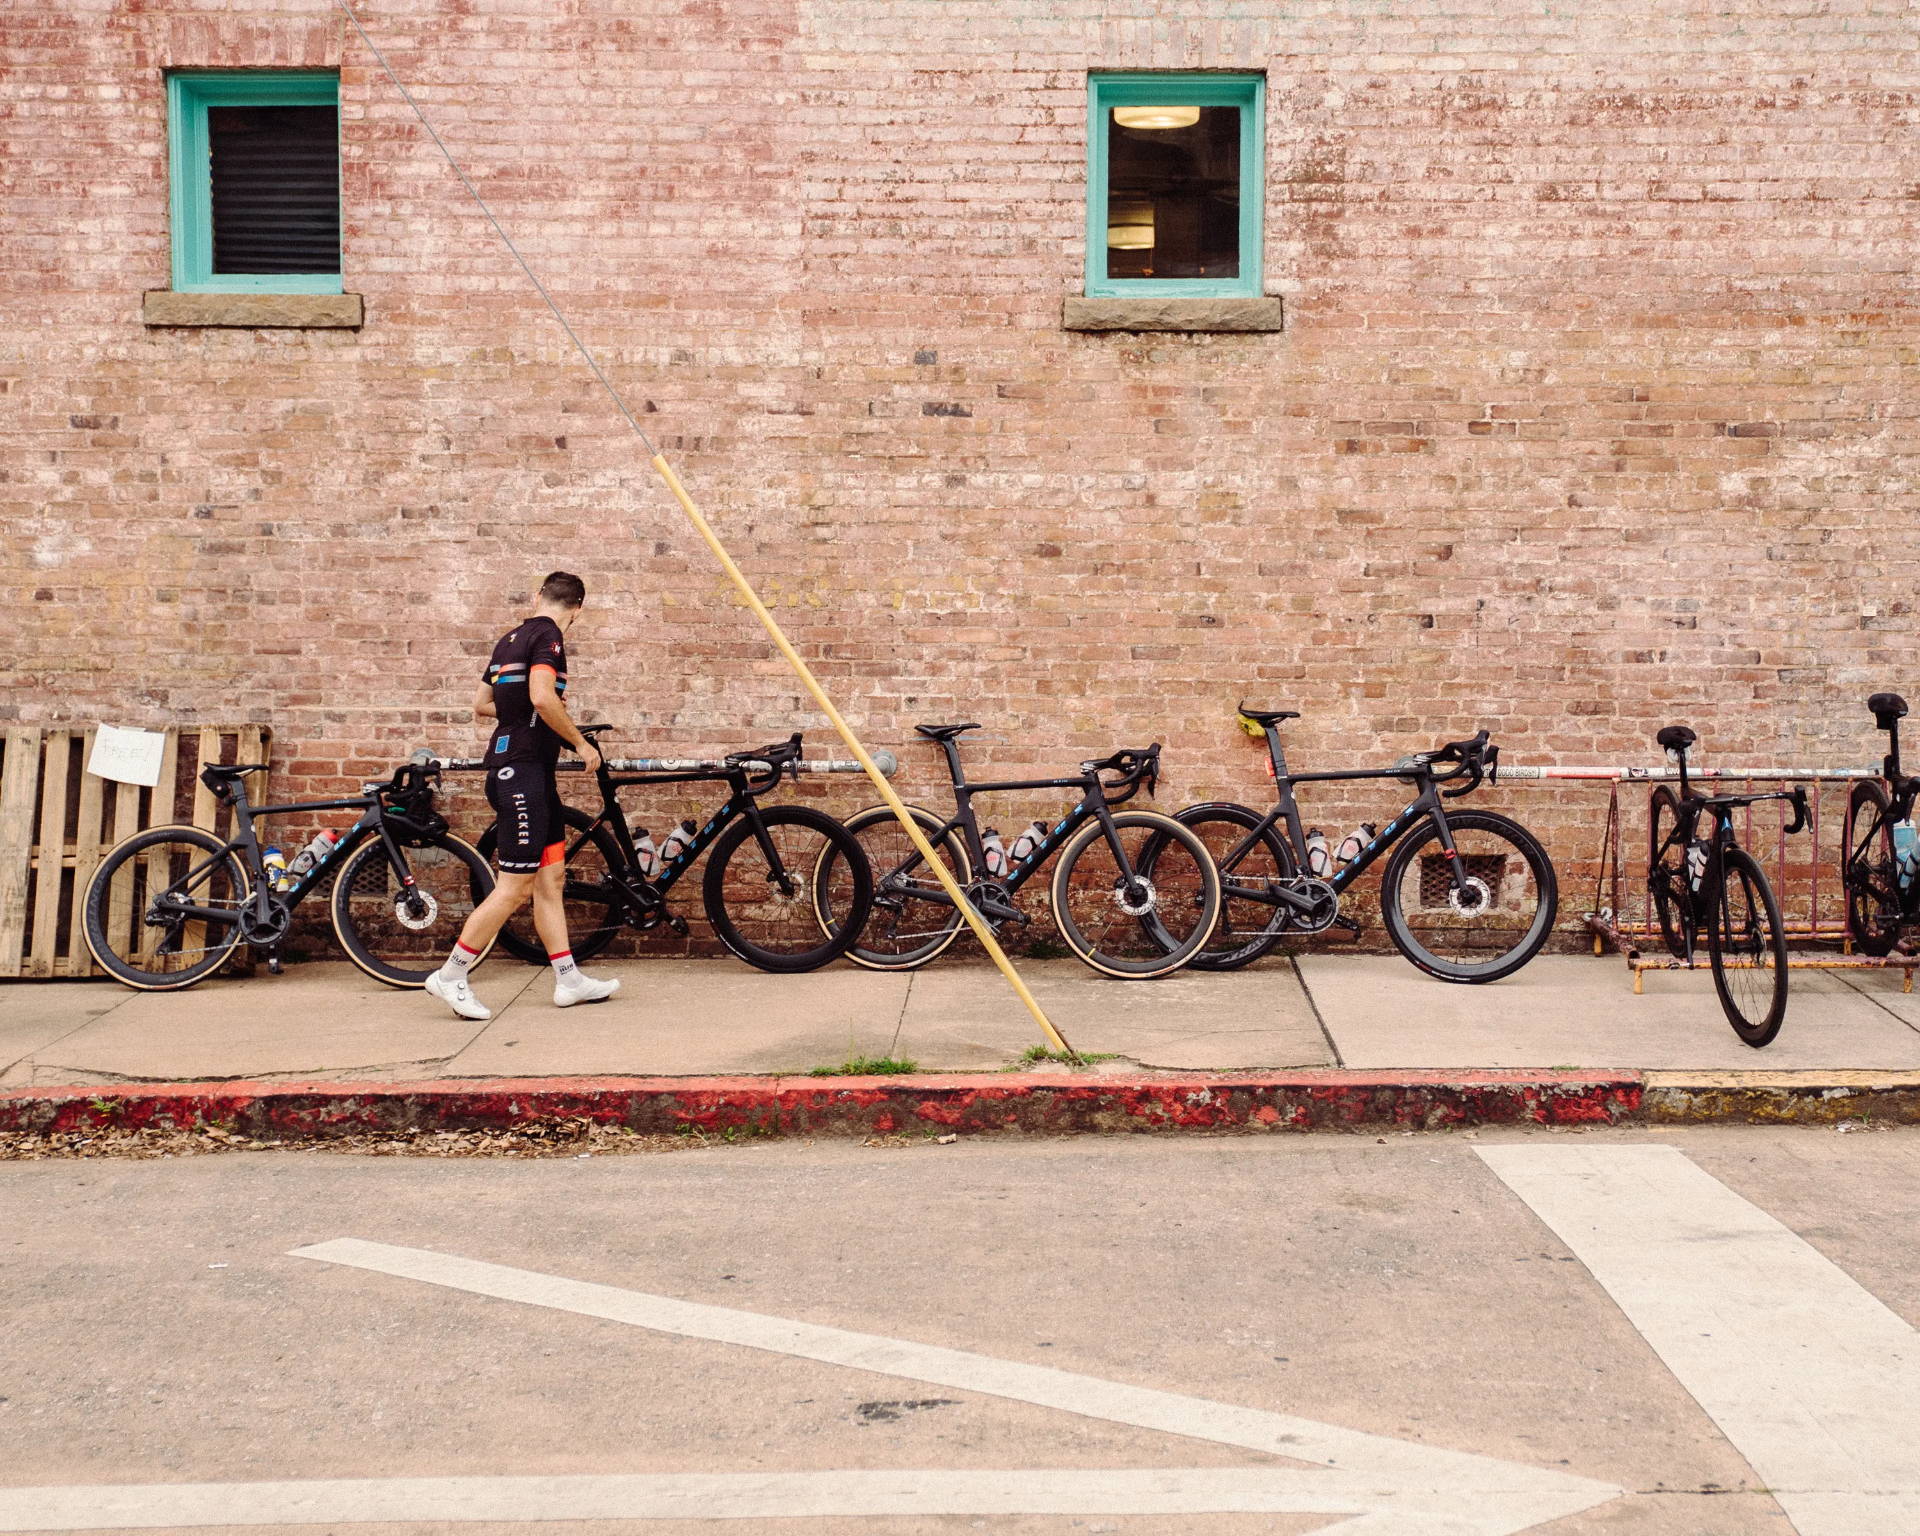 Team Flicker Racing bikes against a brick wall